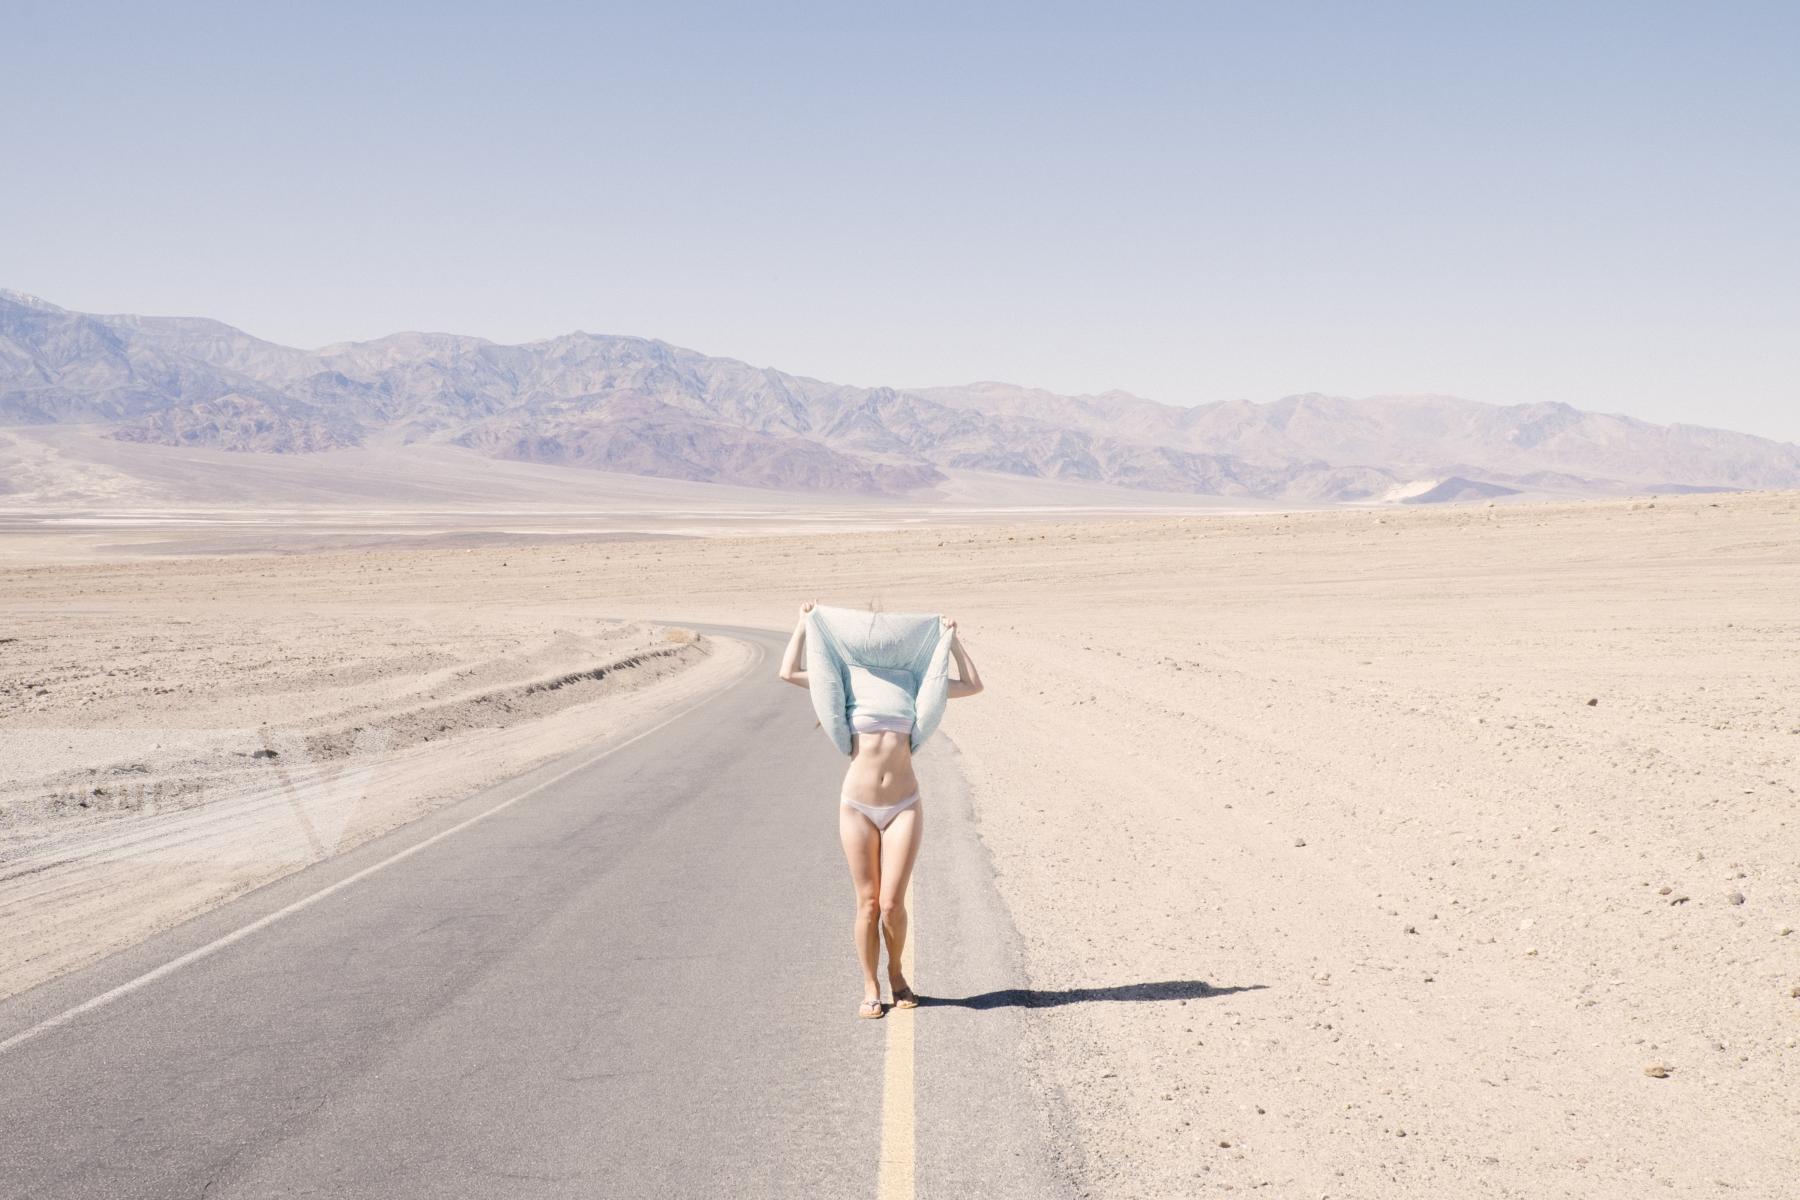 Purchase Woman on Highway, Death Valley by Matt Propert